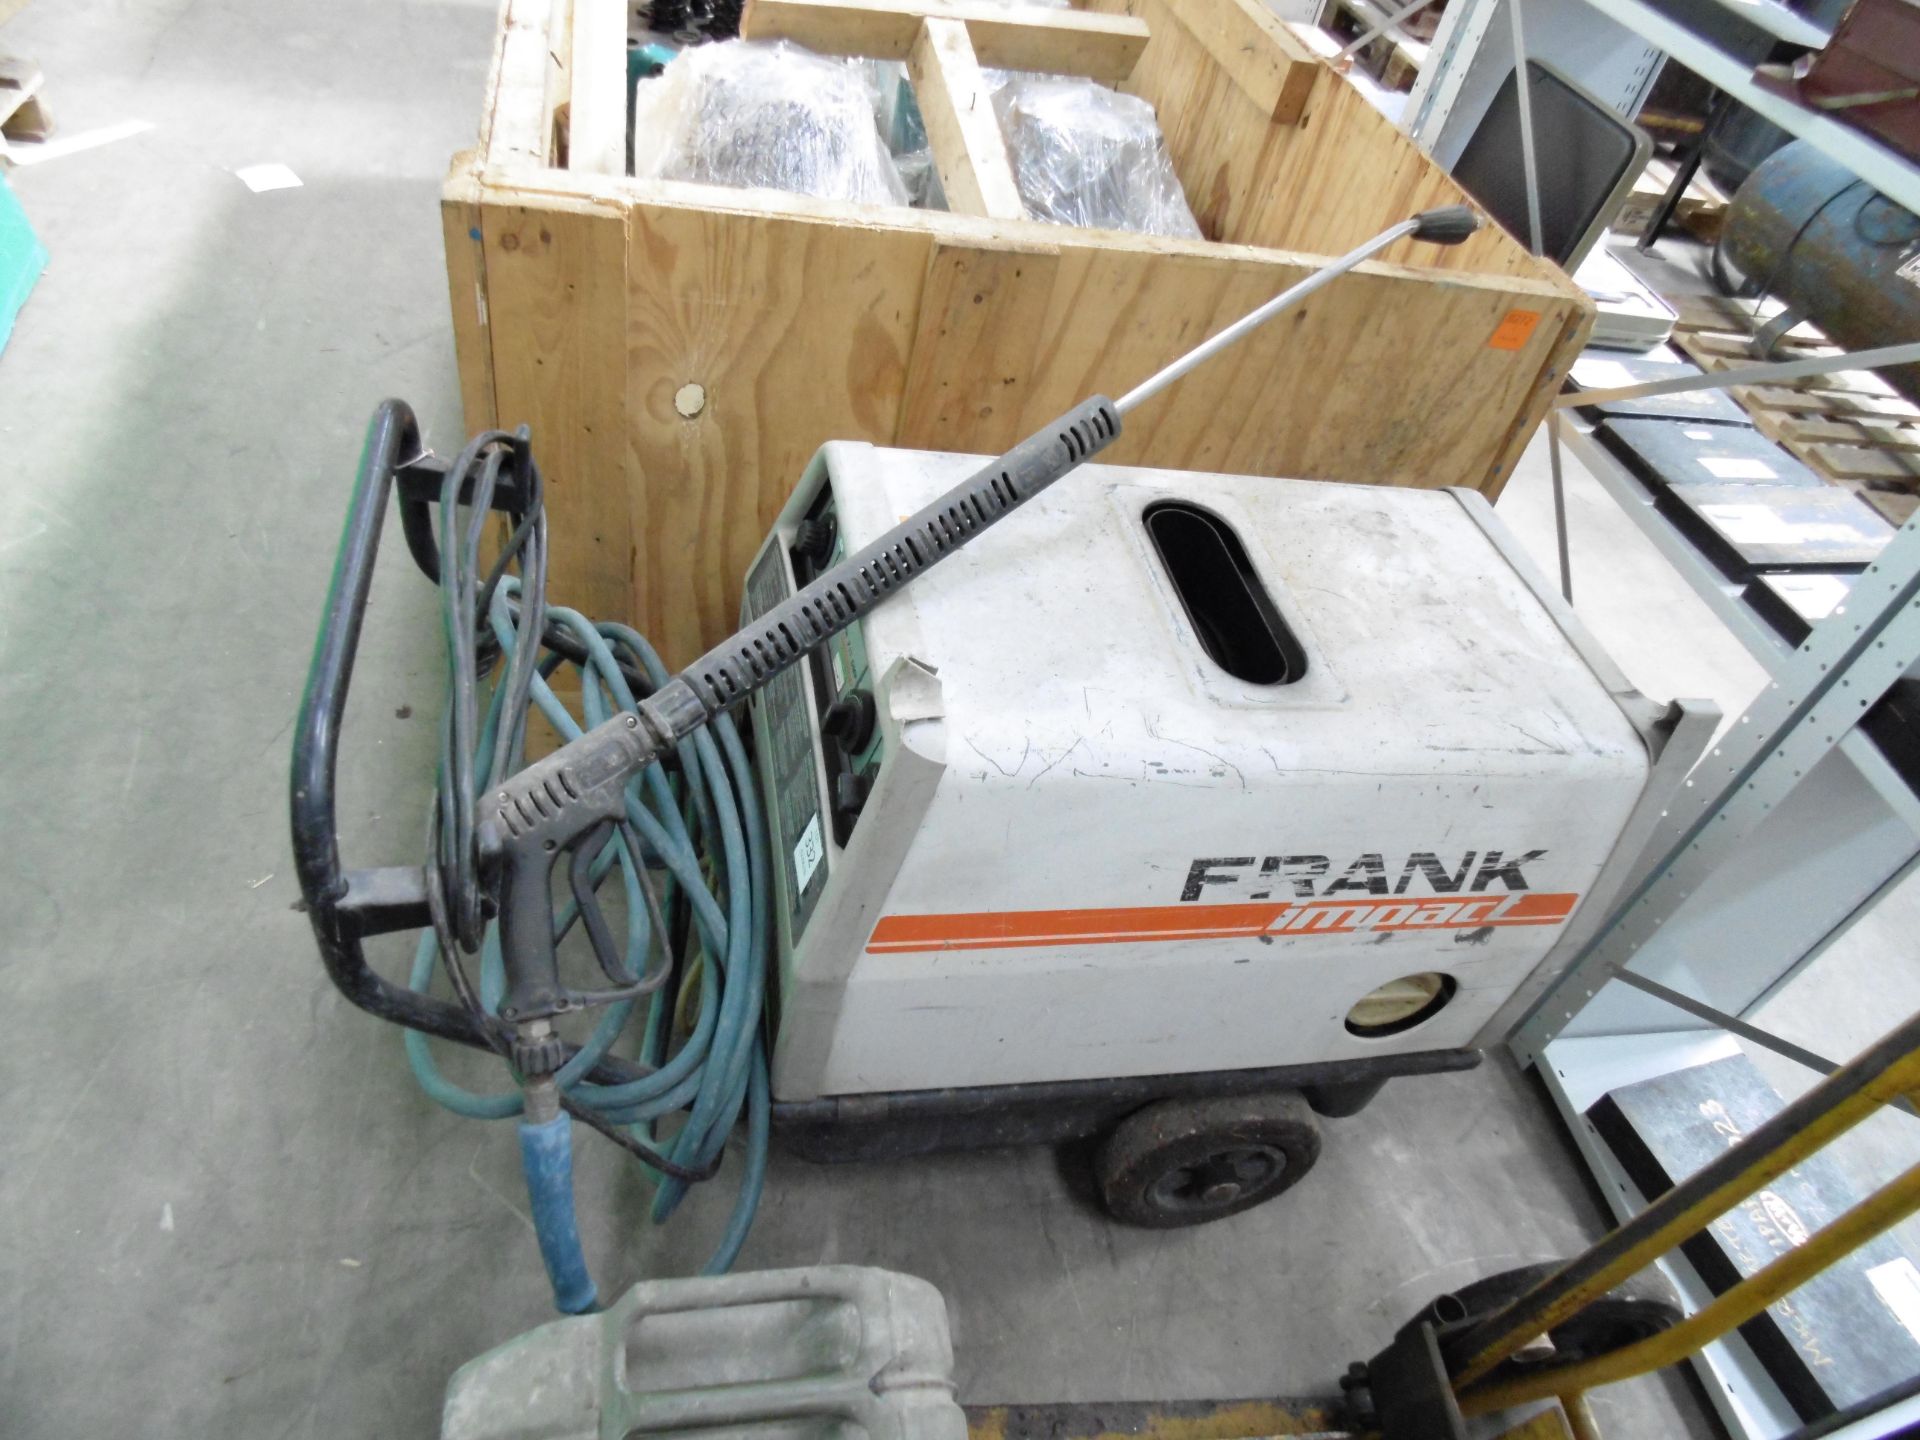 * A Frank Impact FH 711 DMP steam cleaner, 240V